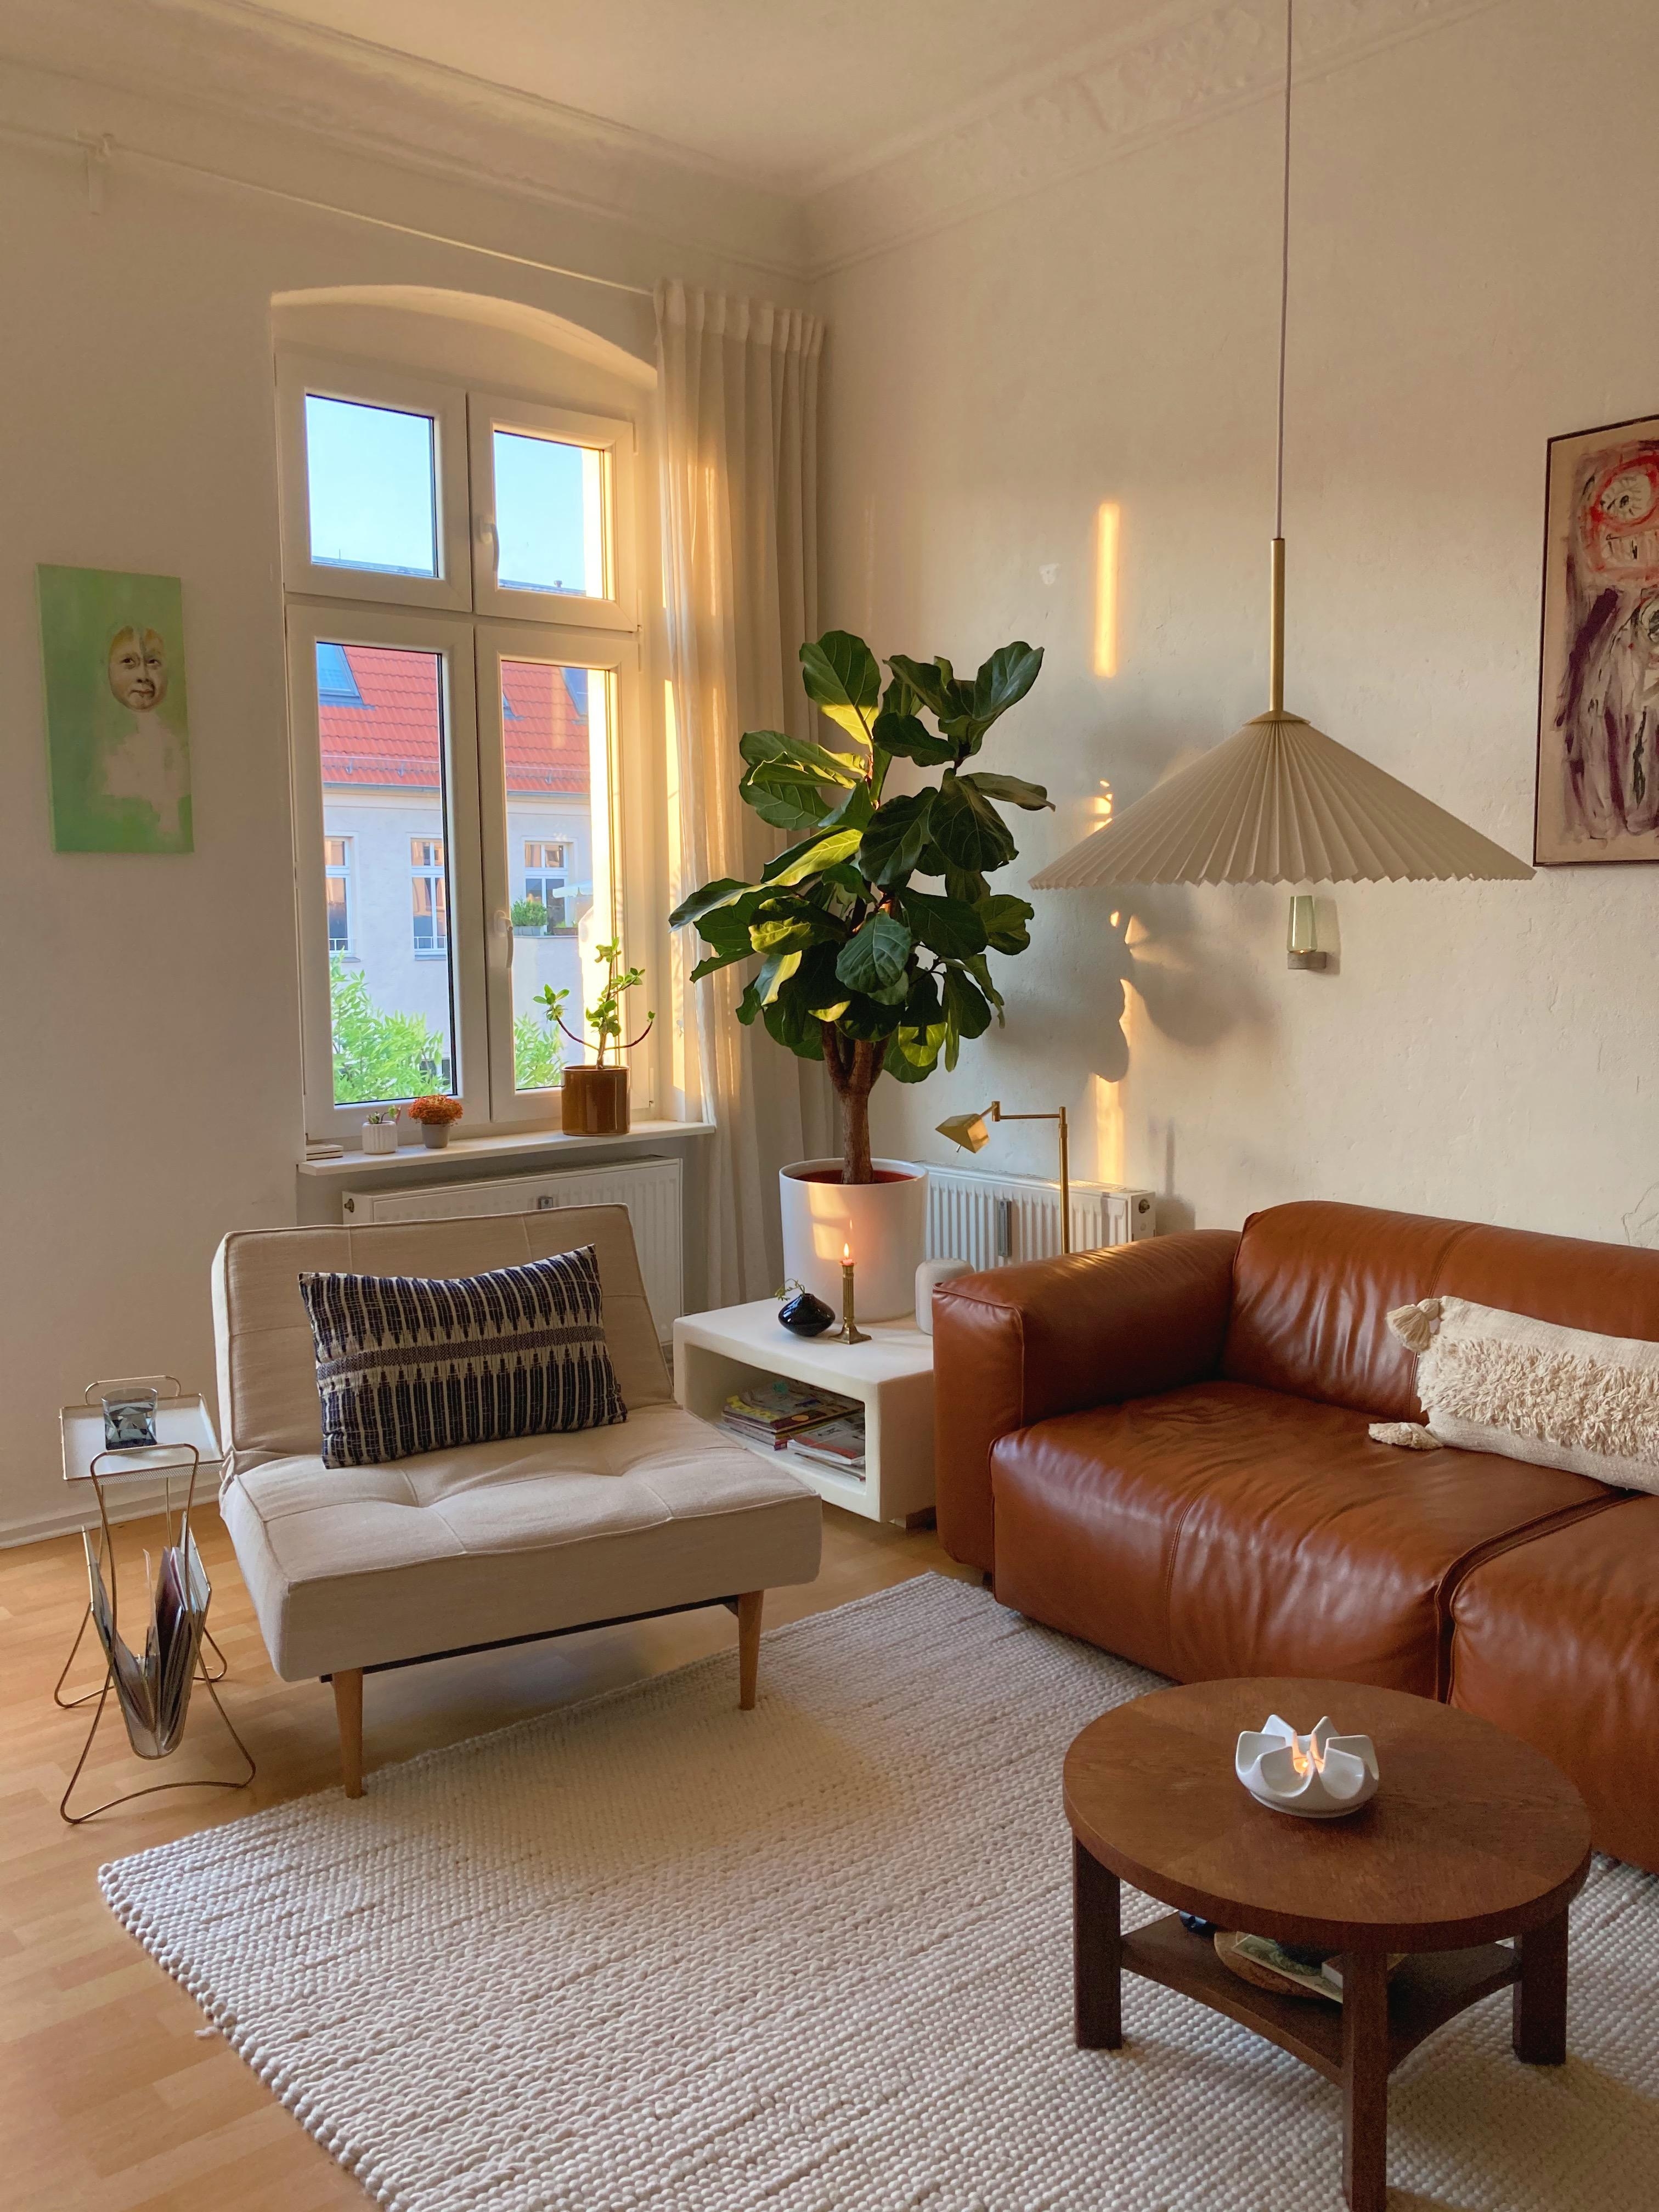 Summertime at it‘s best! 🤩 
#livingroom #zuhause #wohnzimmer #couch #sundowner #sonnenuntergang #lvngrm